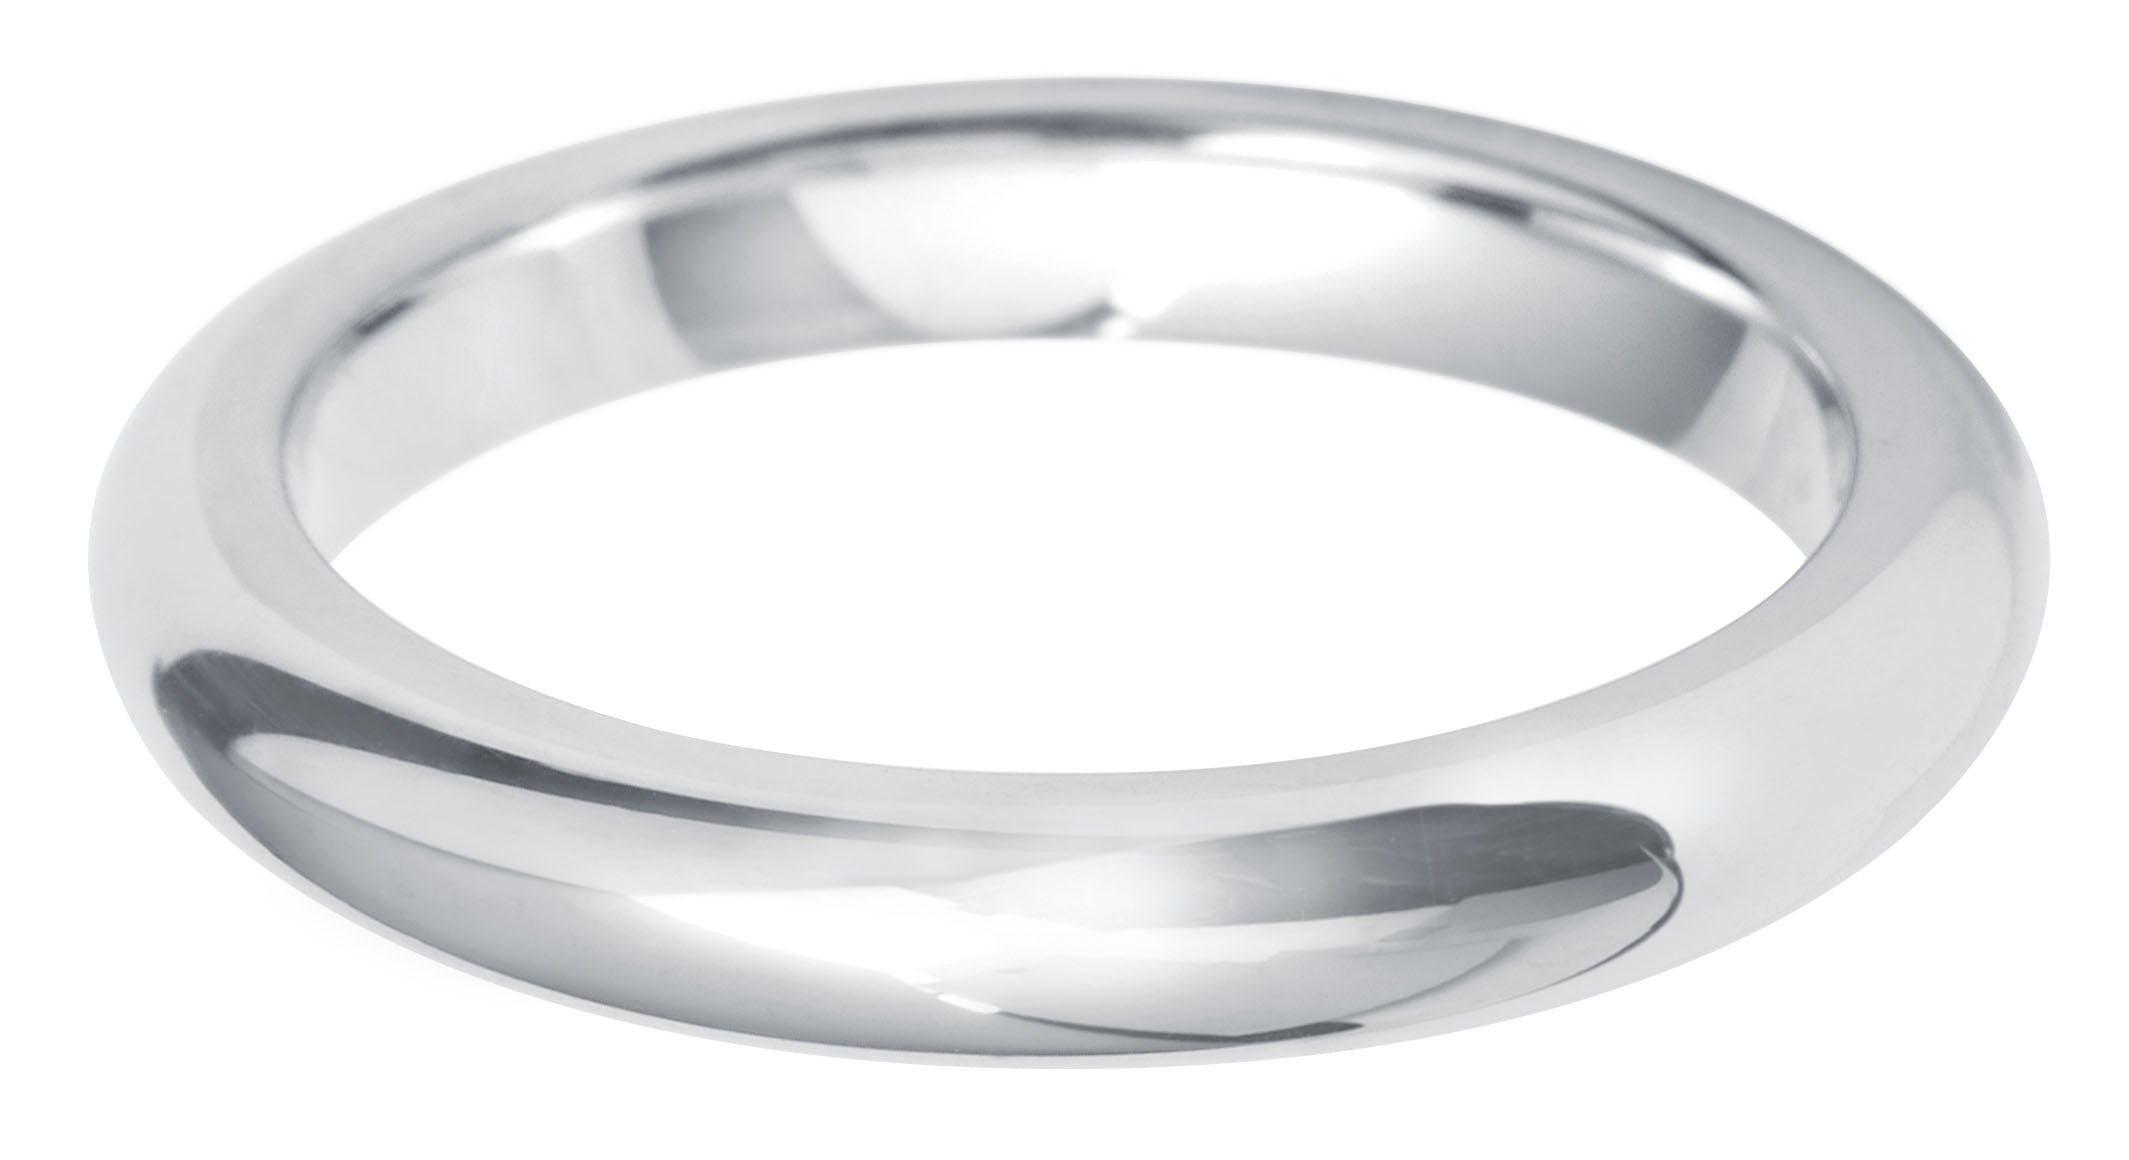 3mm Paris lightweight Wedding Ring